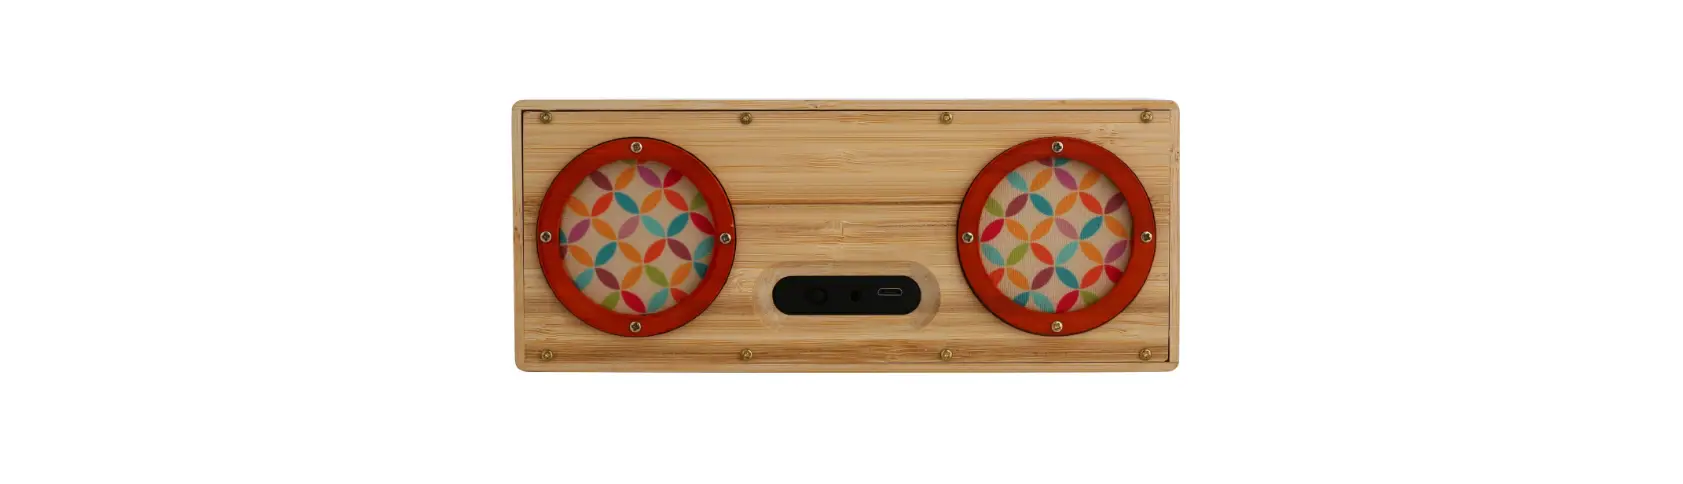 Wood Effect Portable Speaker